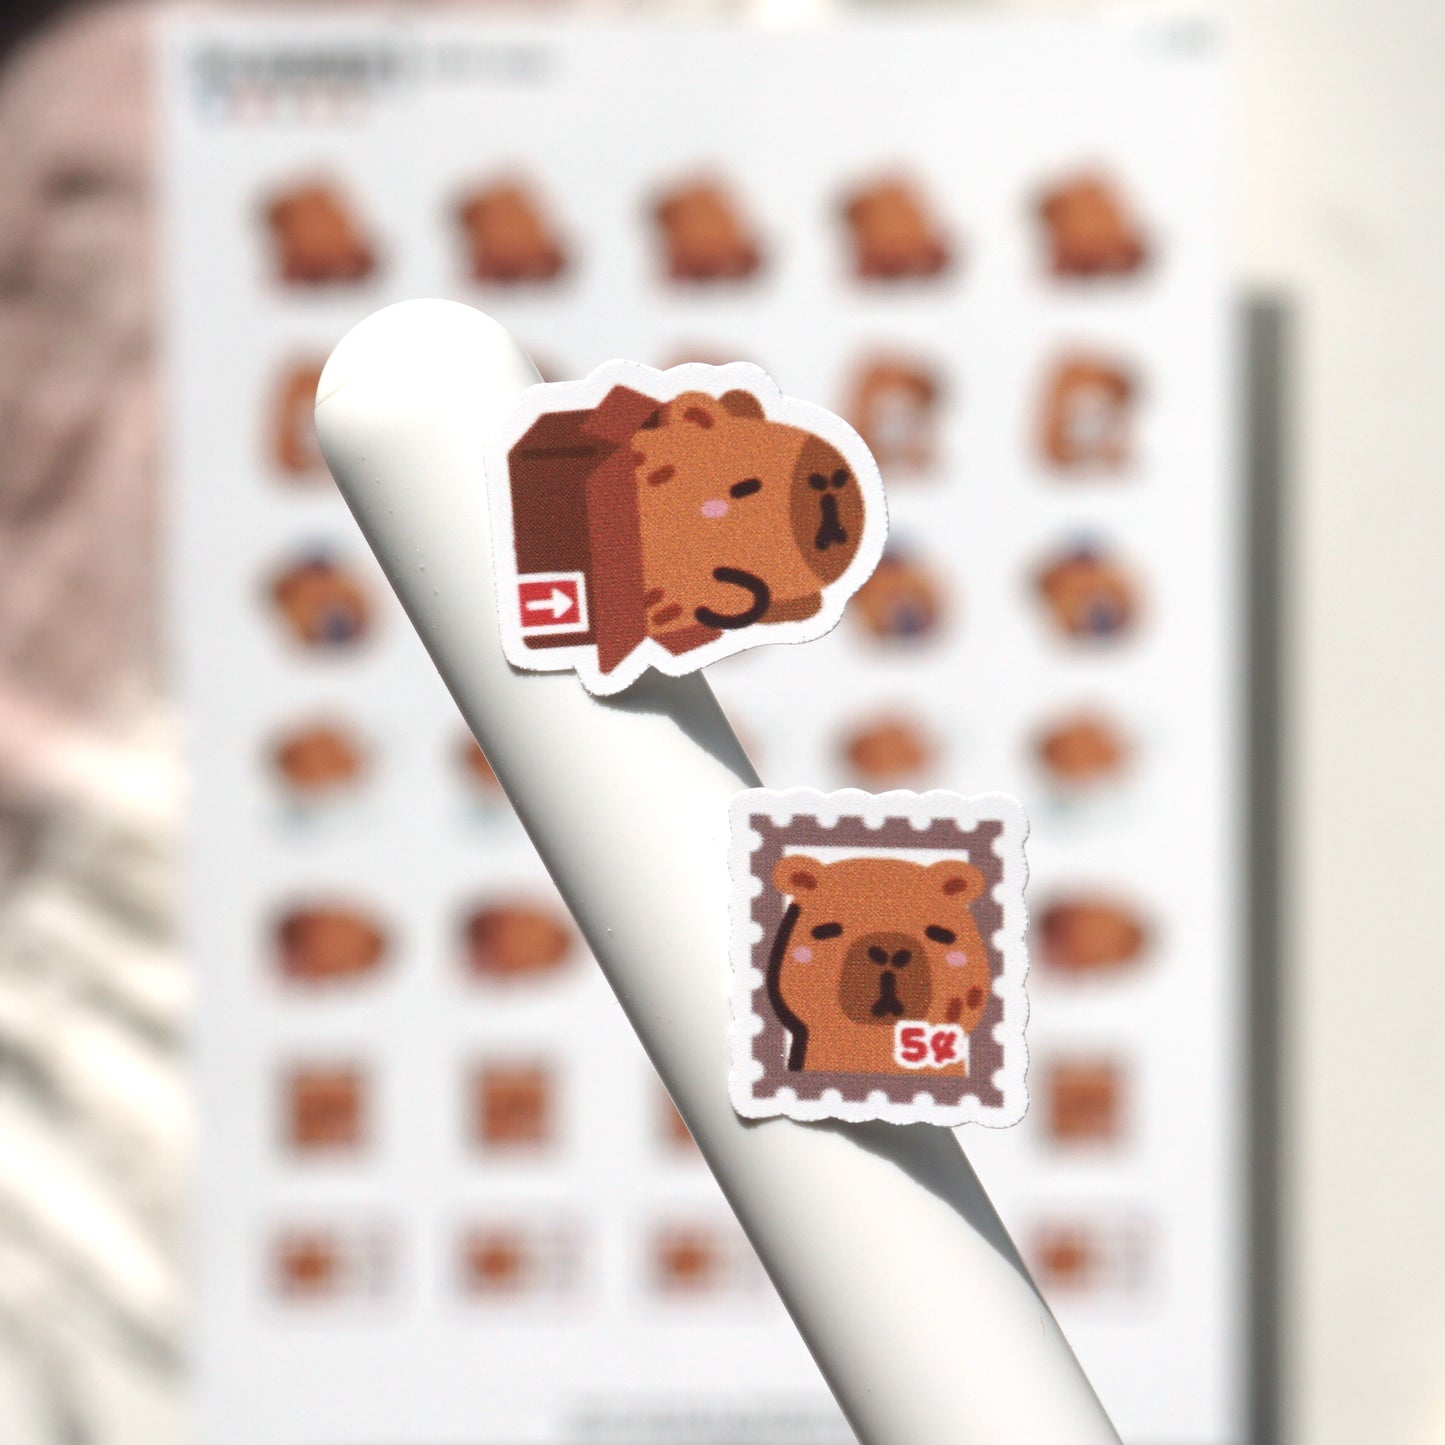 Capy-Mail Sticker Sheet